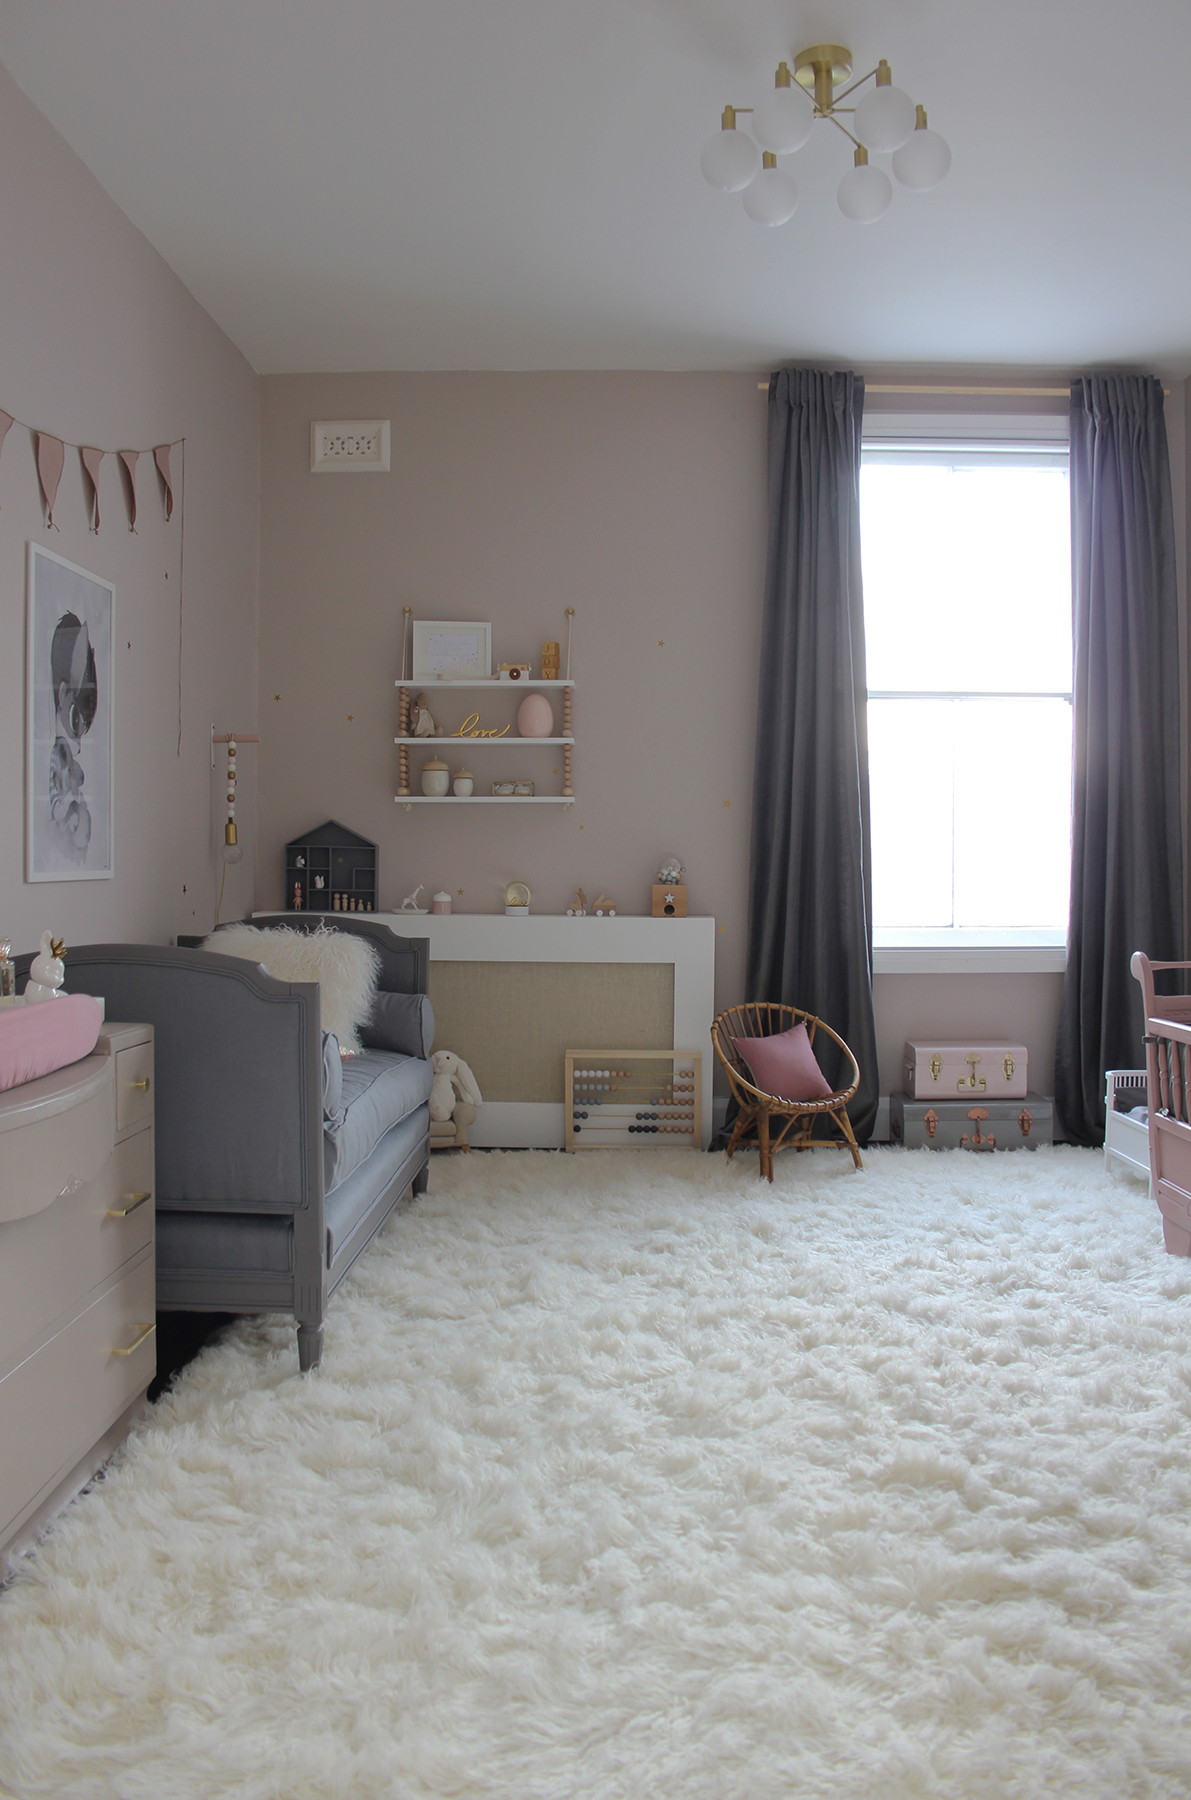 Preciously Me blog : One Room Challenge - Nursery Reveal